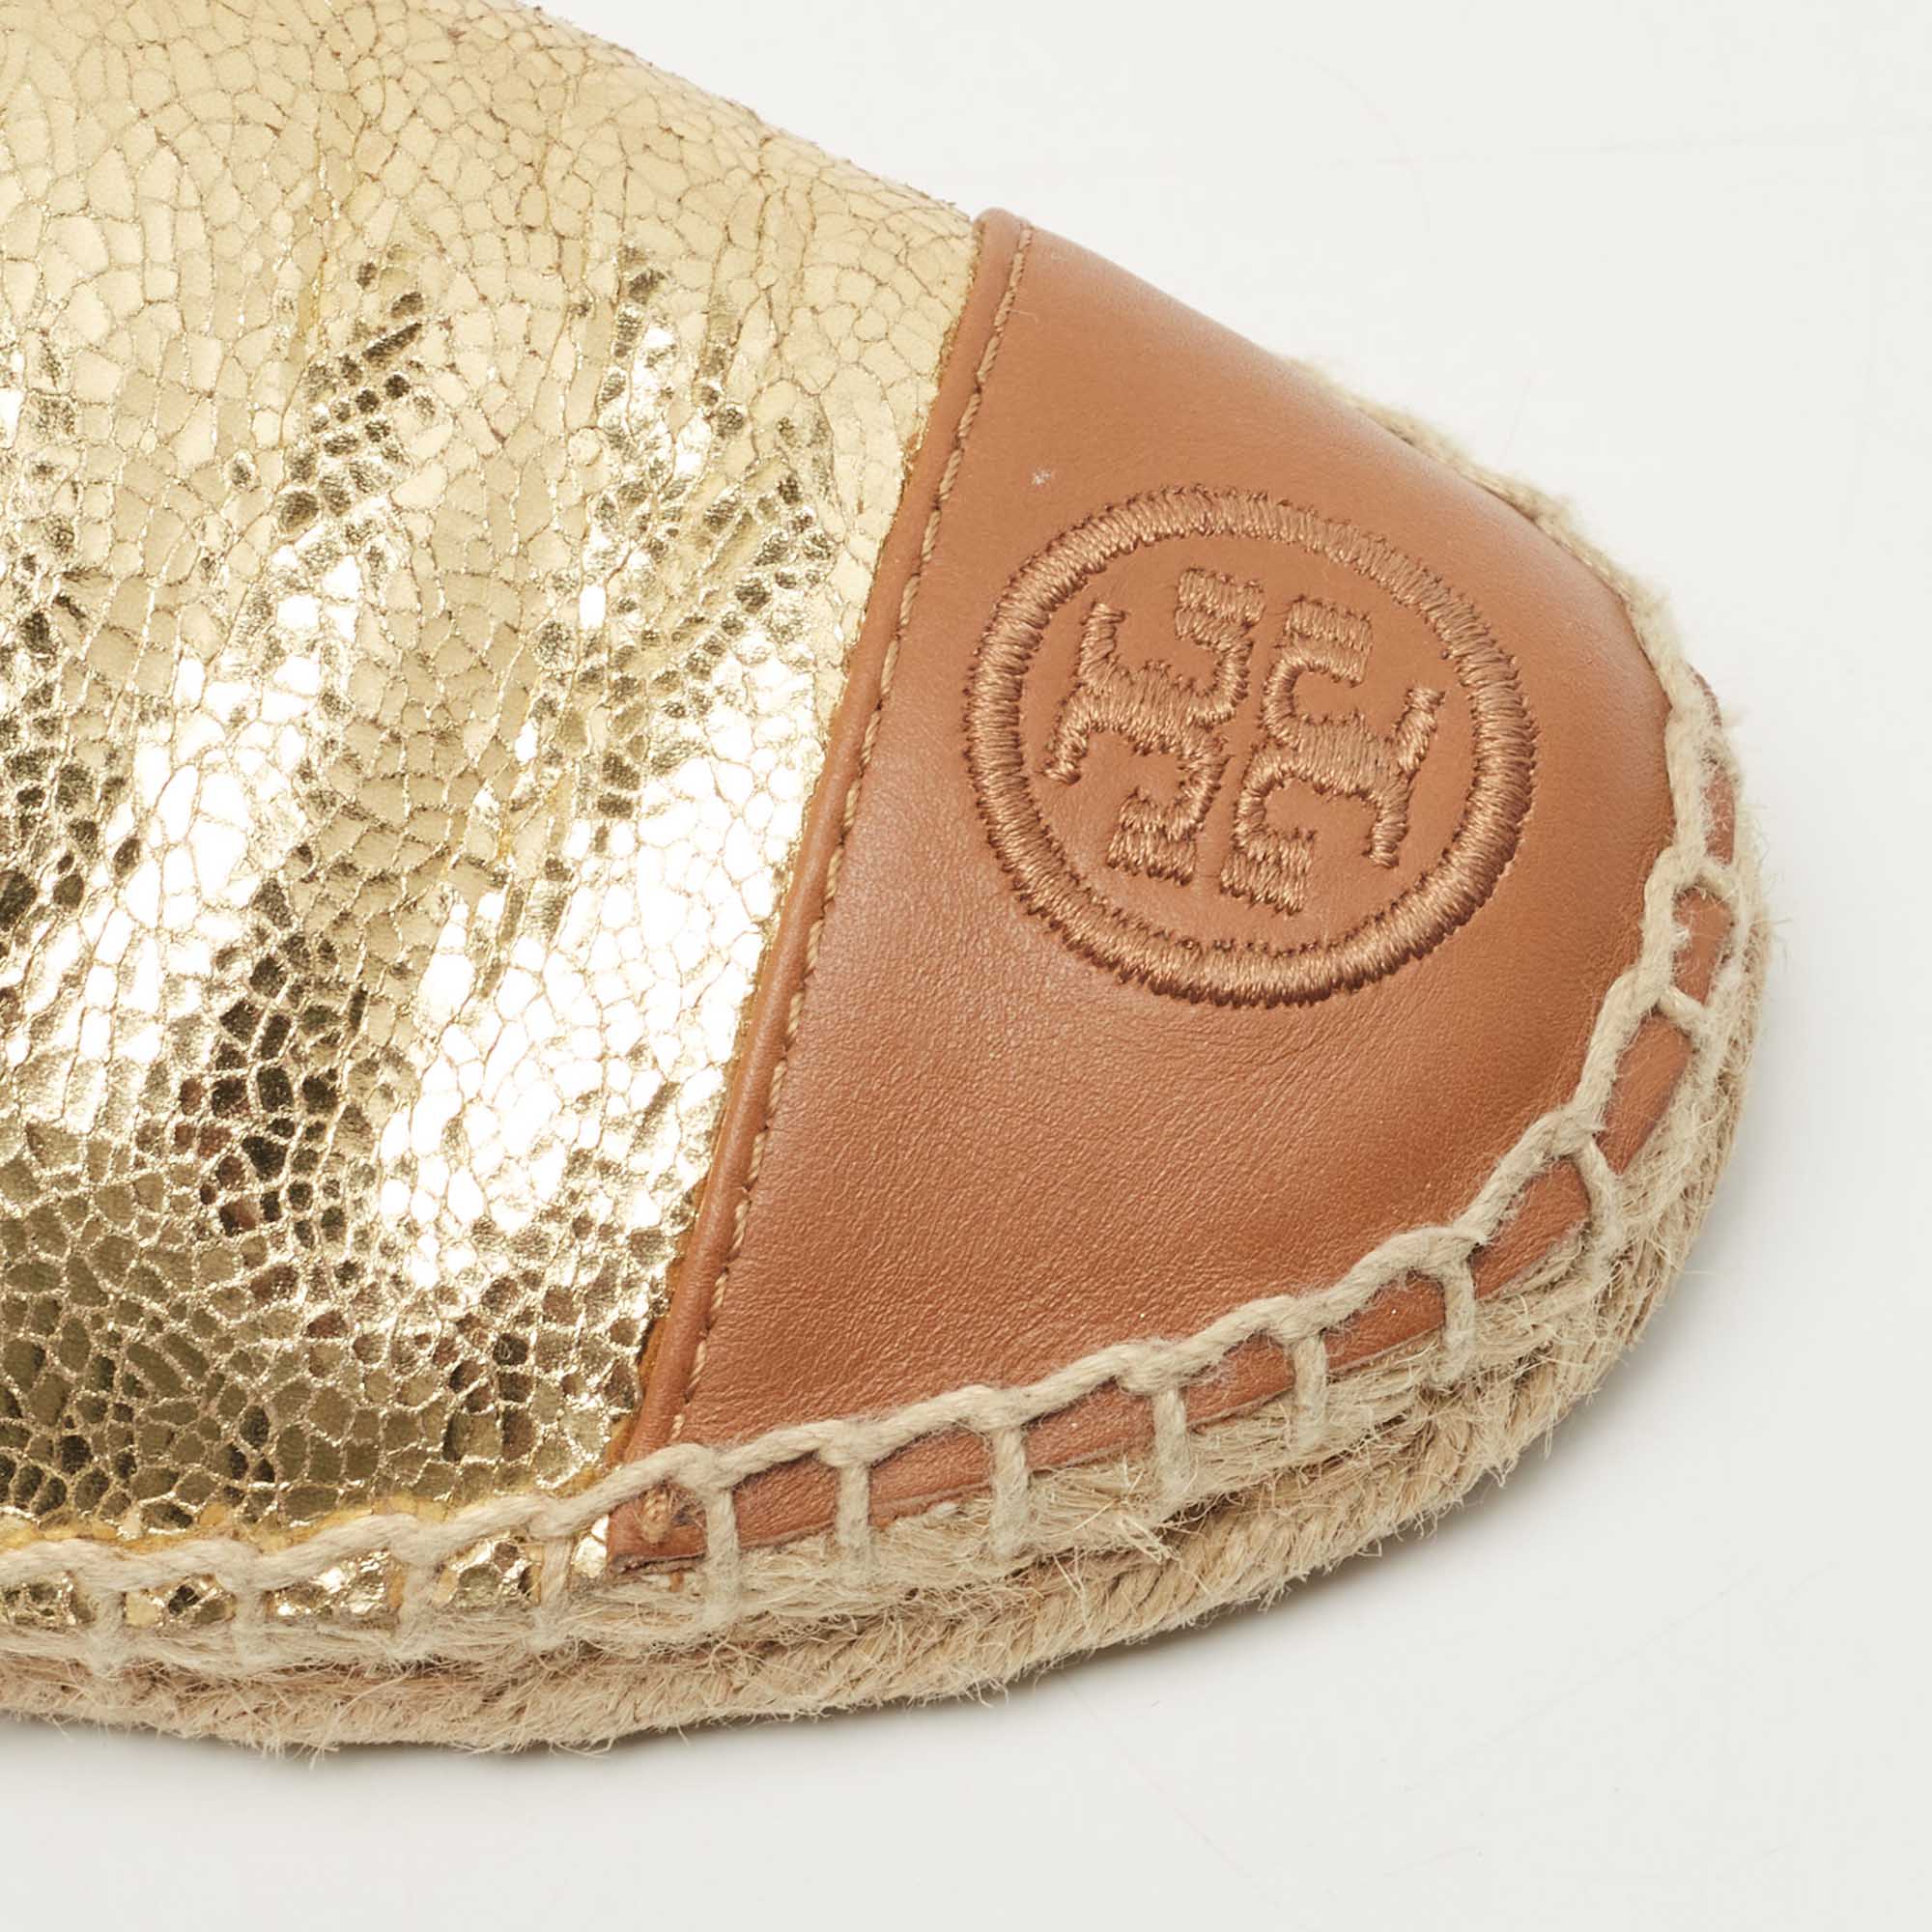 Tory Burch Gold/Beige Leather Cap Toe Flat Espadrilles Size 35.5